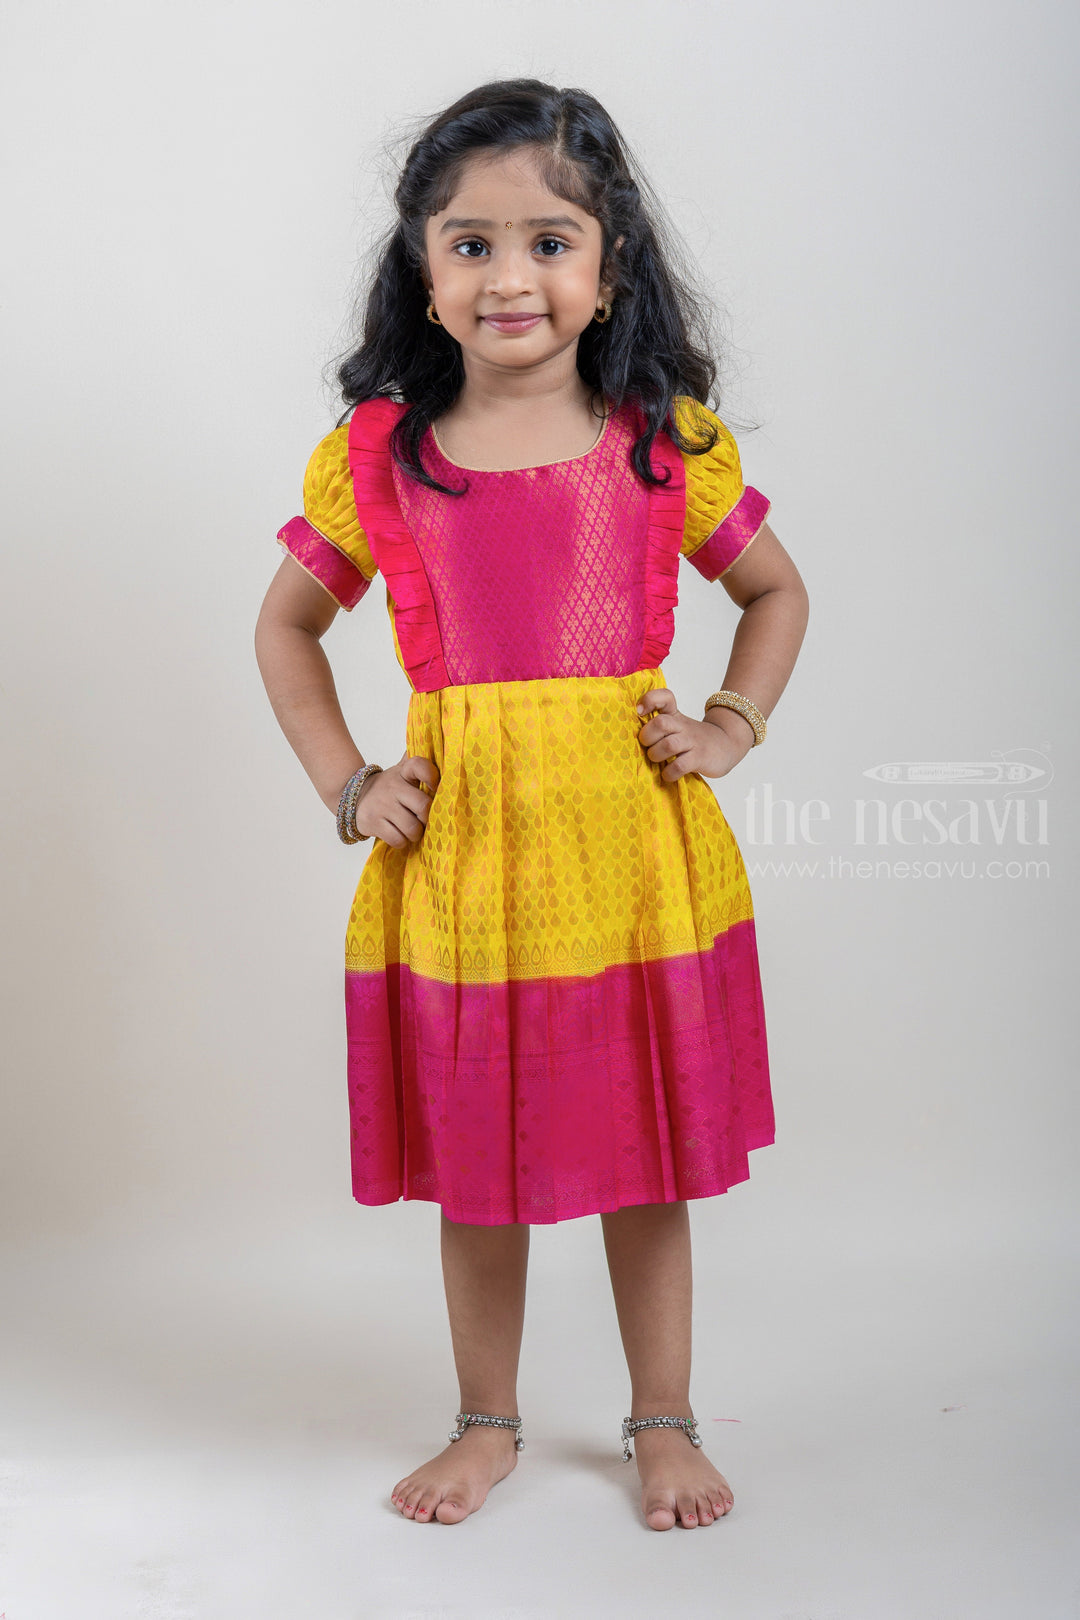 The Nesavu Girls Kanchi Silk Frock Vibrant Yellow Pink Banarasi Soft Silk / Pattu Frocks For Toddler Girl With Ruffle Yoke Nesavu 18 (2Y) / Yellow / Big Border SF610A Traditional Silk Wear Frock | Latest Kanchi Silk Dress | The Nesavu